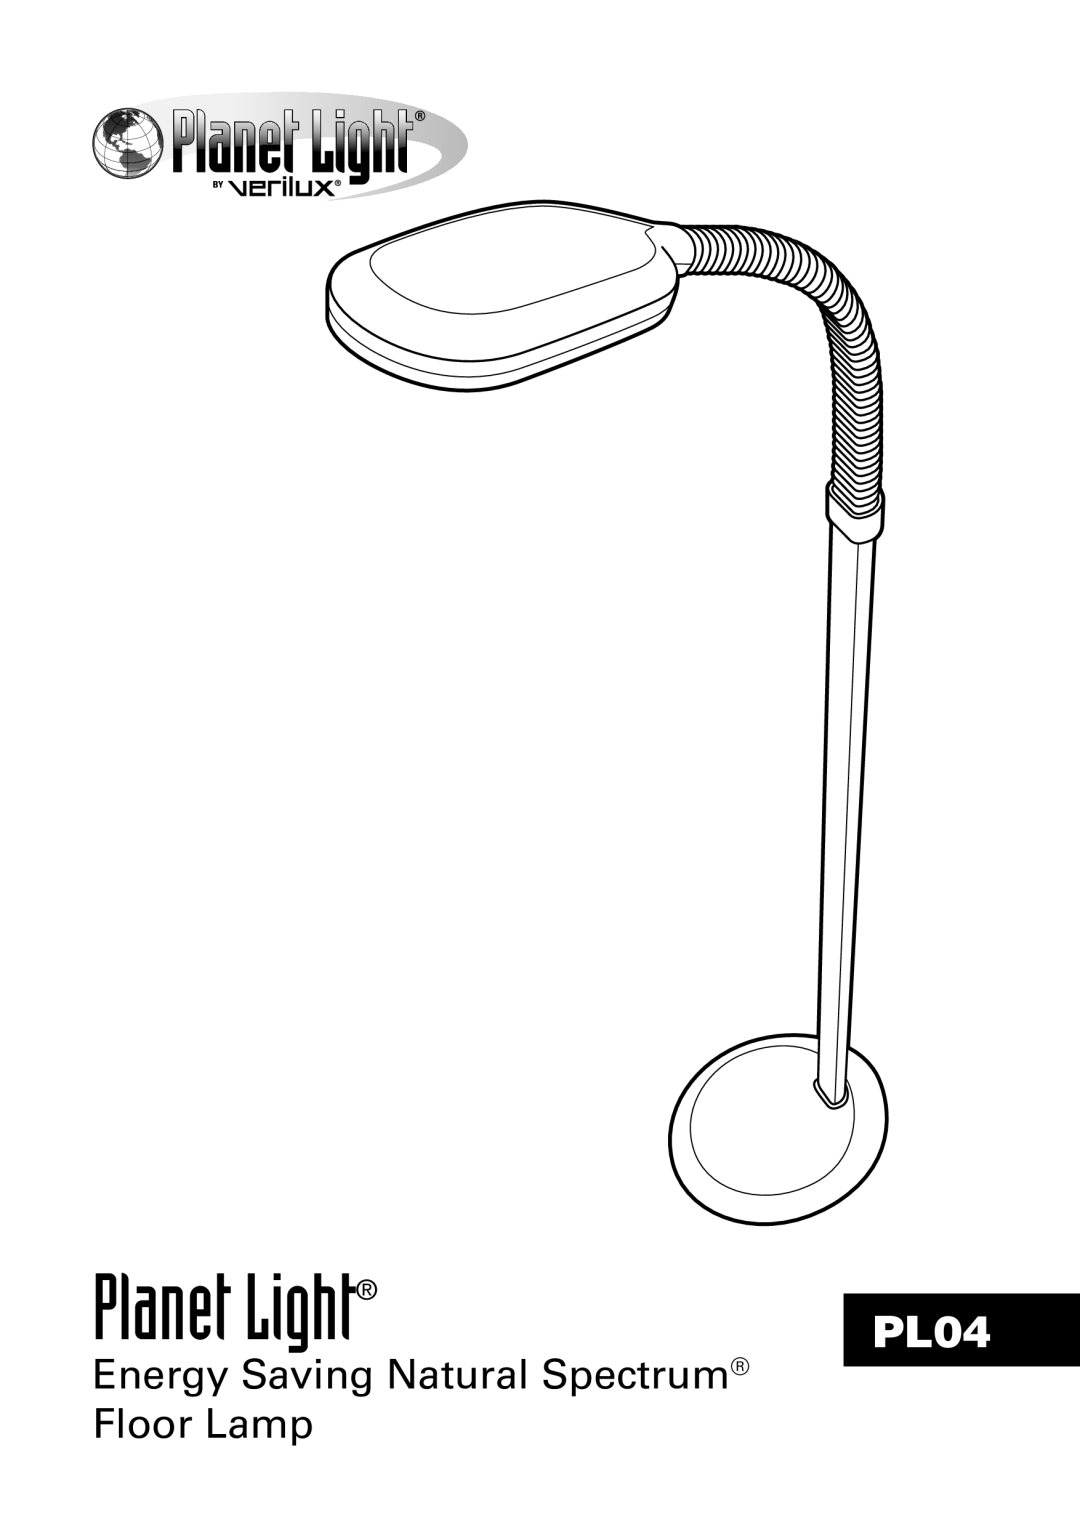 Verilux PL04 manual Planet Light, Energy Saving Natural Spectrum Floor Lamp 